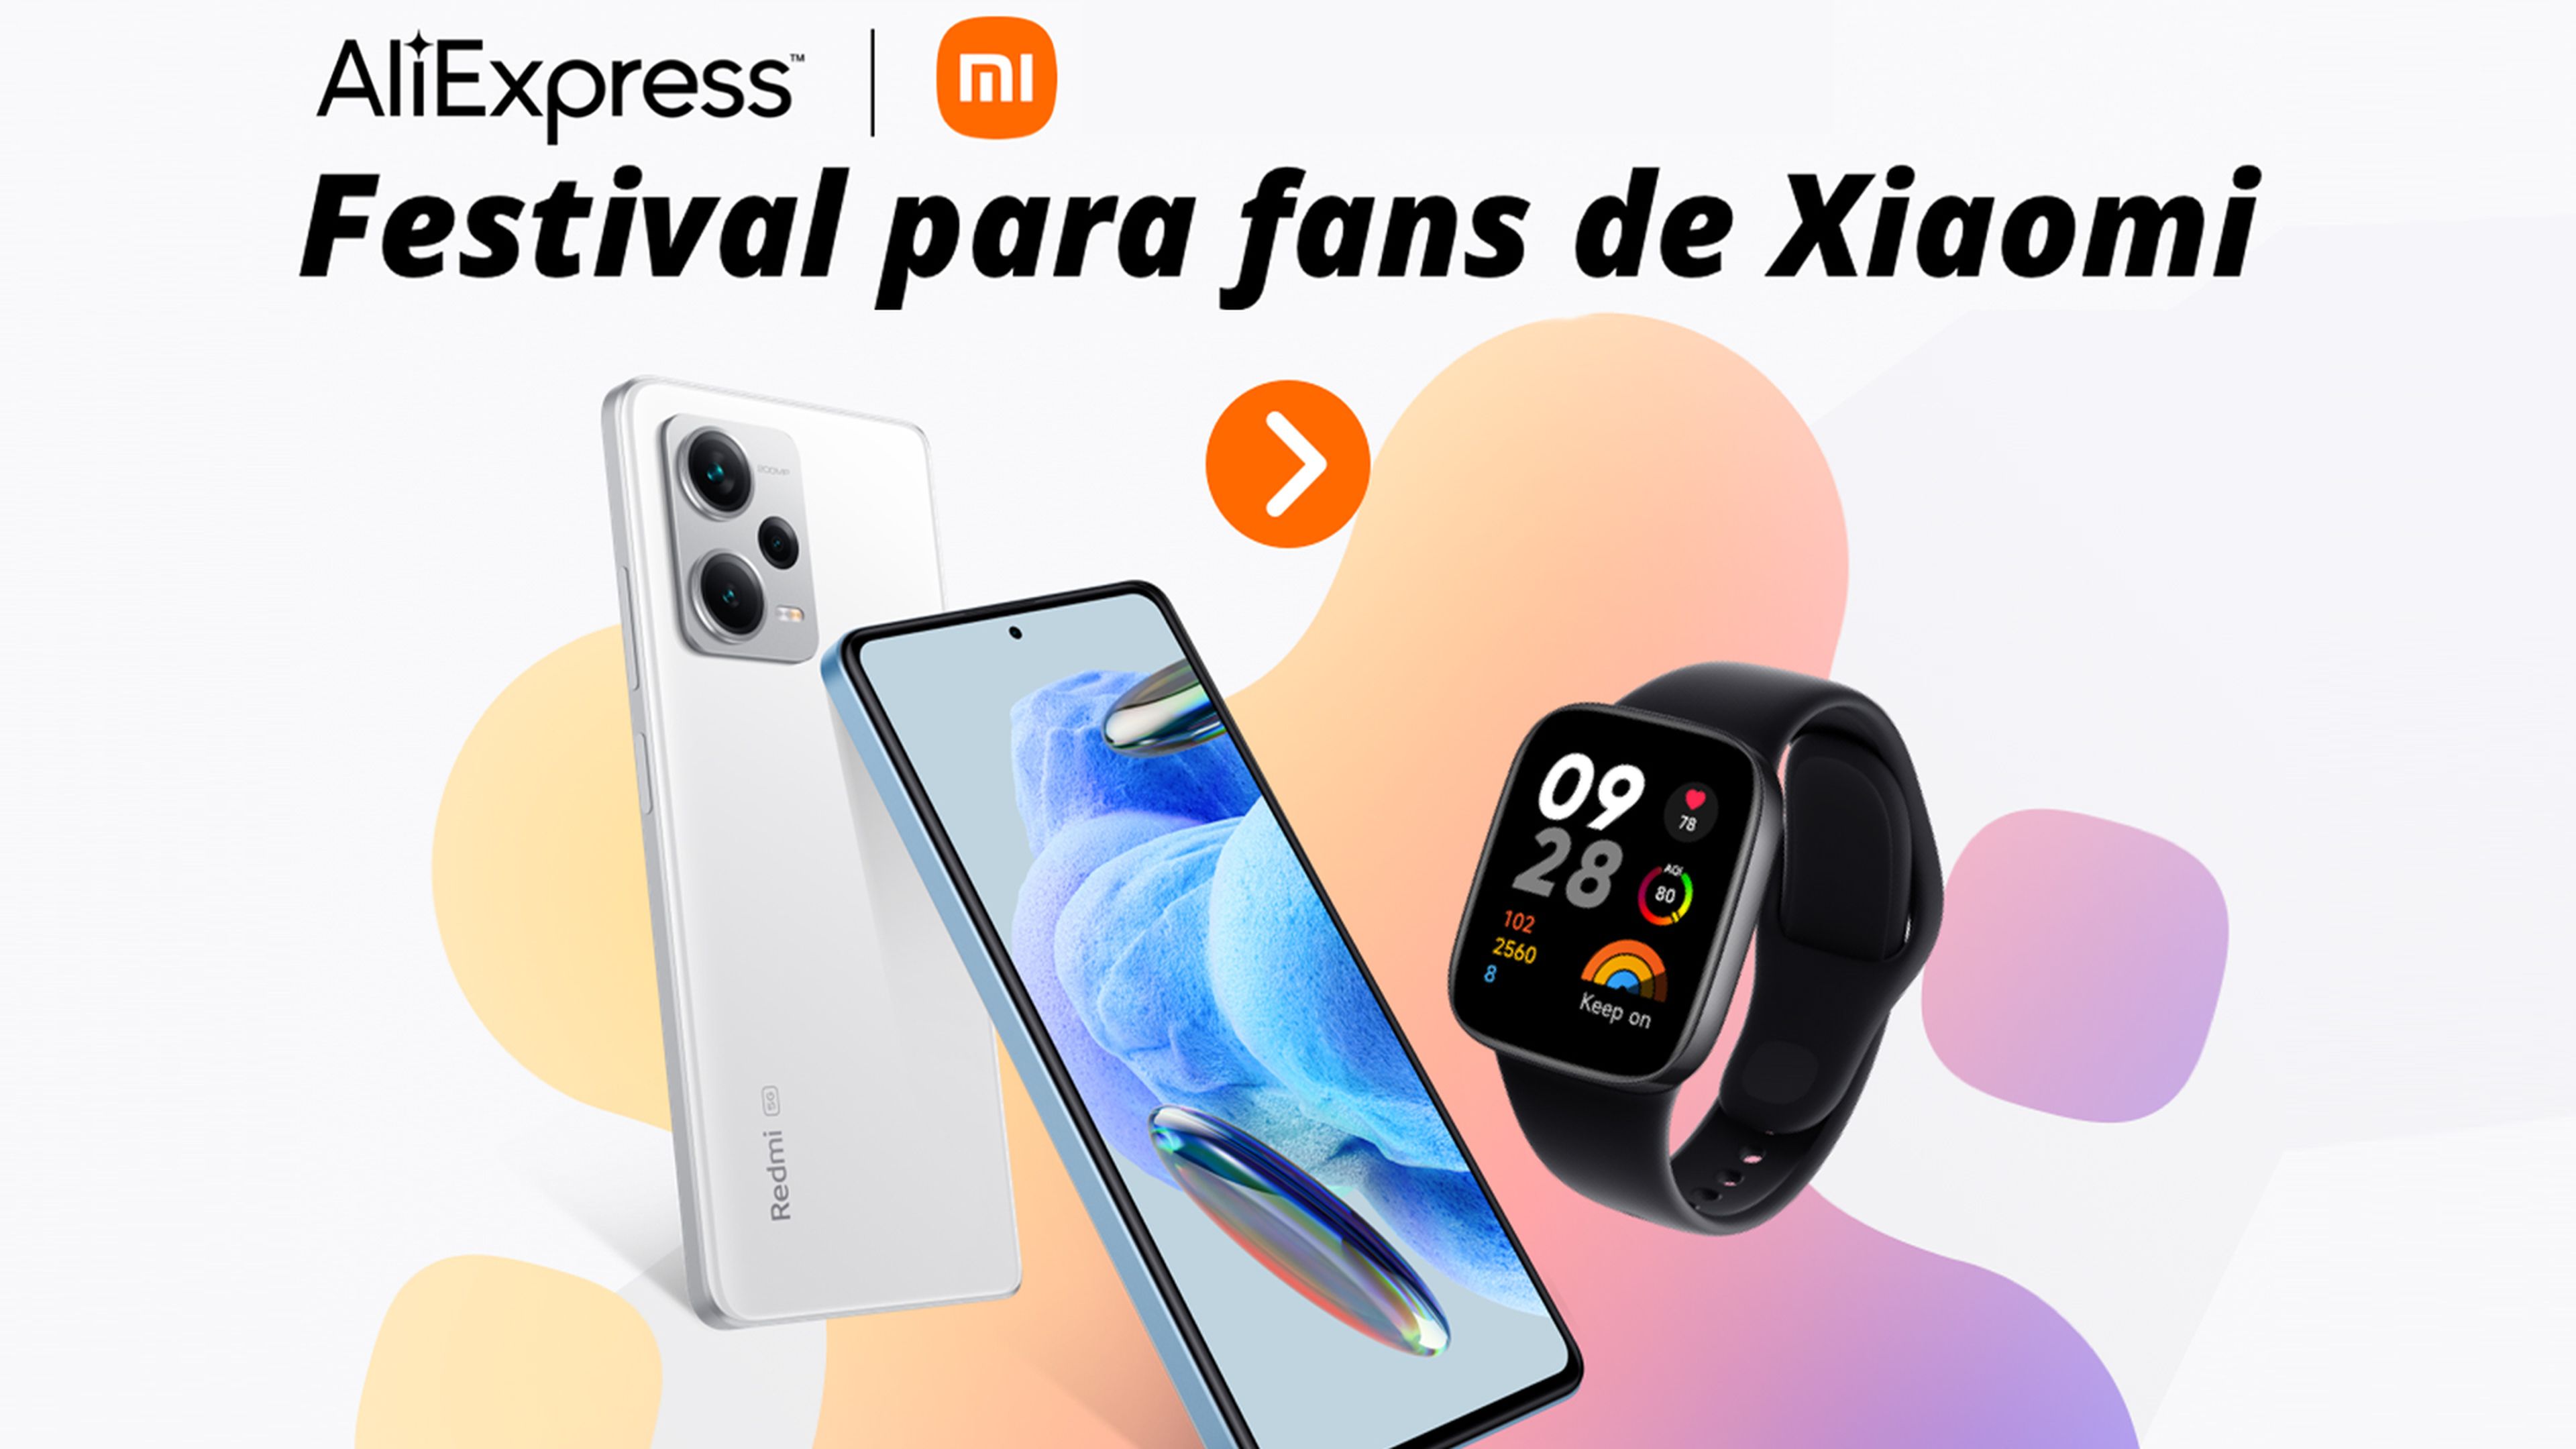 Xiaomi Fans de AliExpress